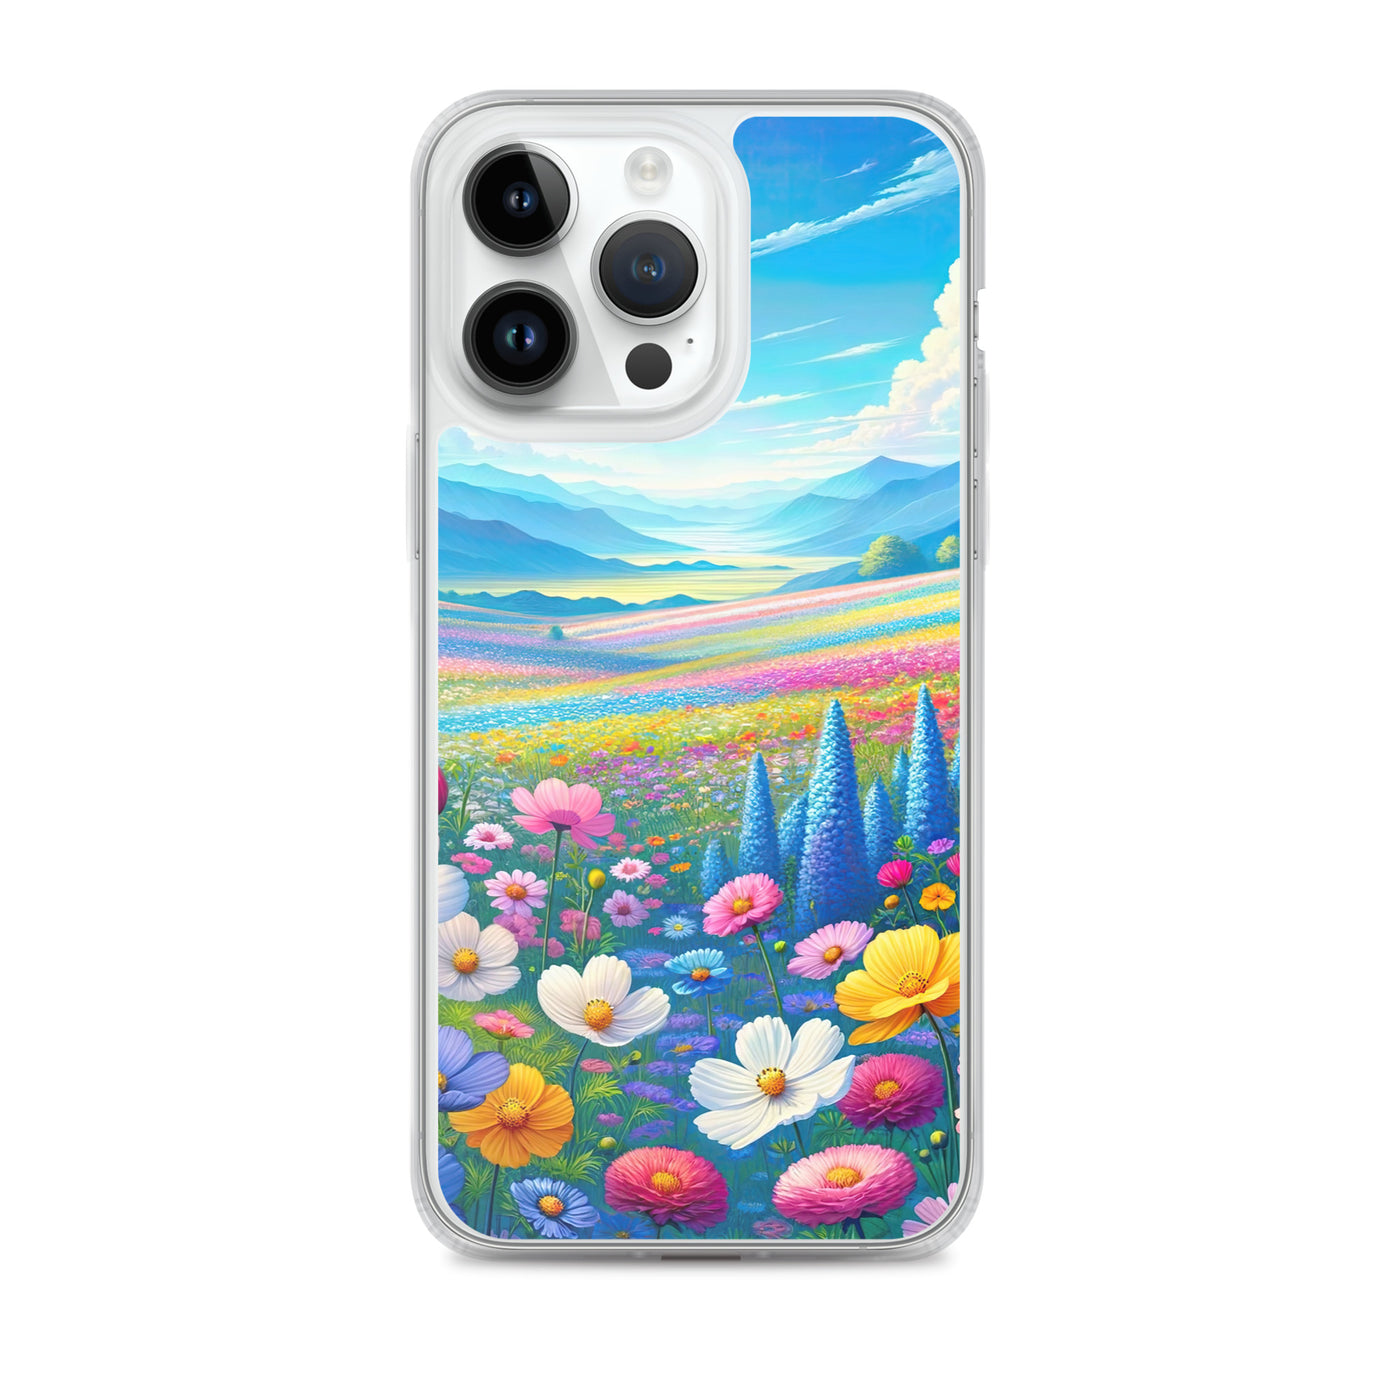 Weitläufiges Blumenfeld unter himmelblauem Himmel, leuchtende Flora - iPhone Schutzhülle (durchsichtig) camping xxx yyy zzz iPhone 14 Pro Max